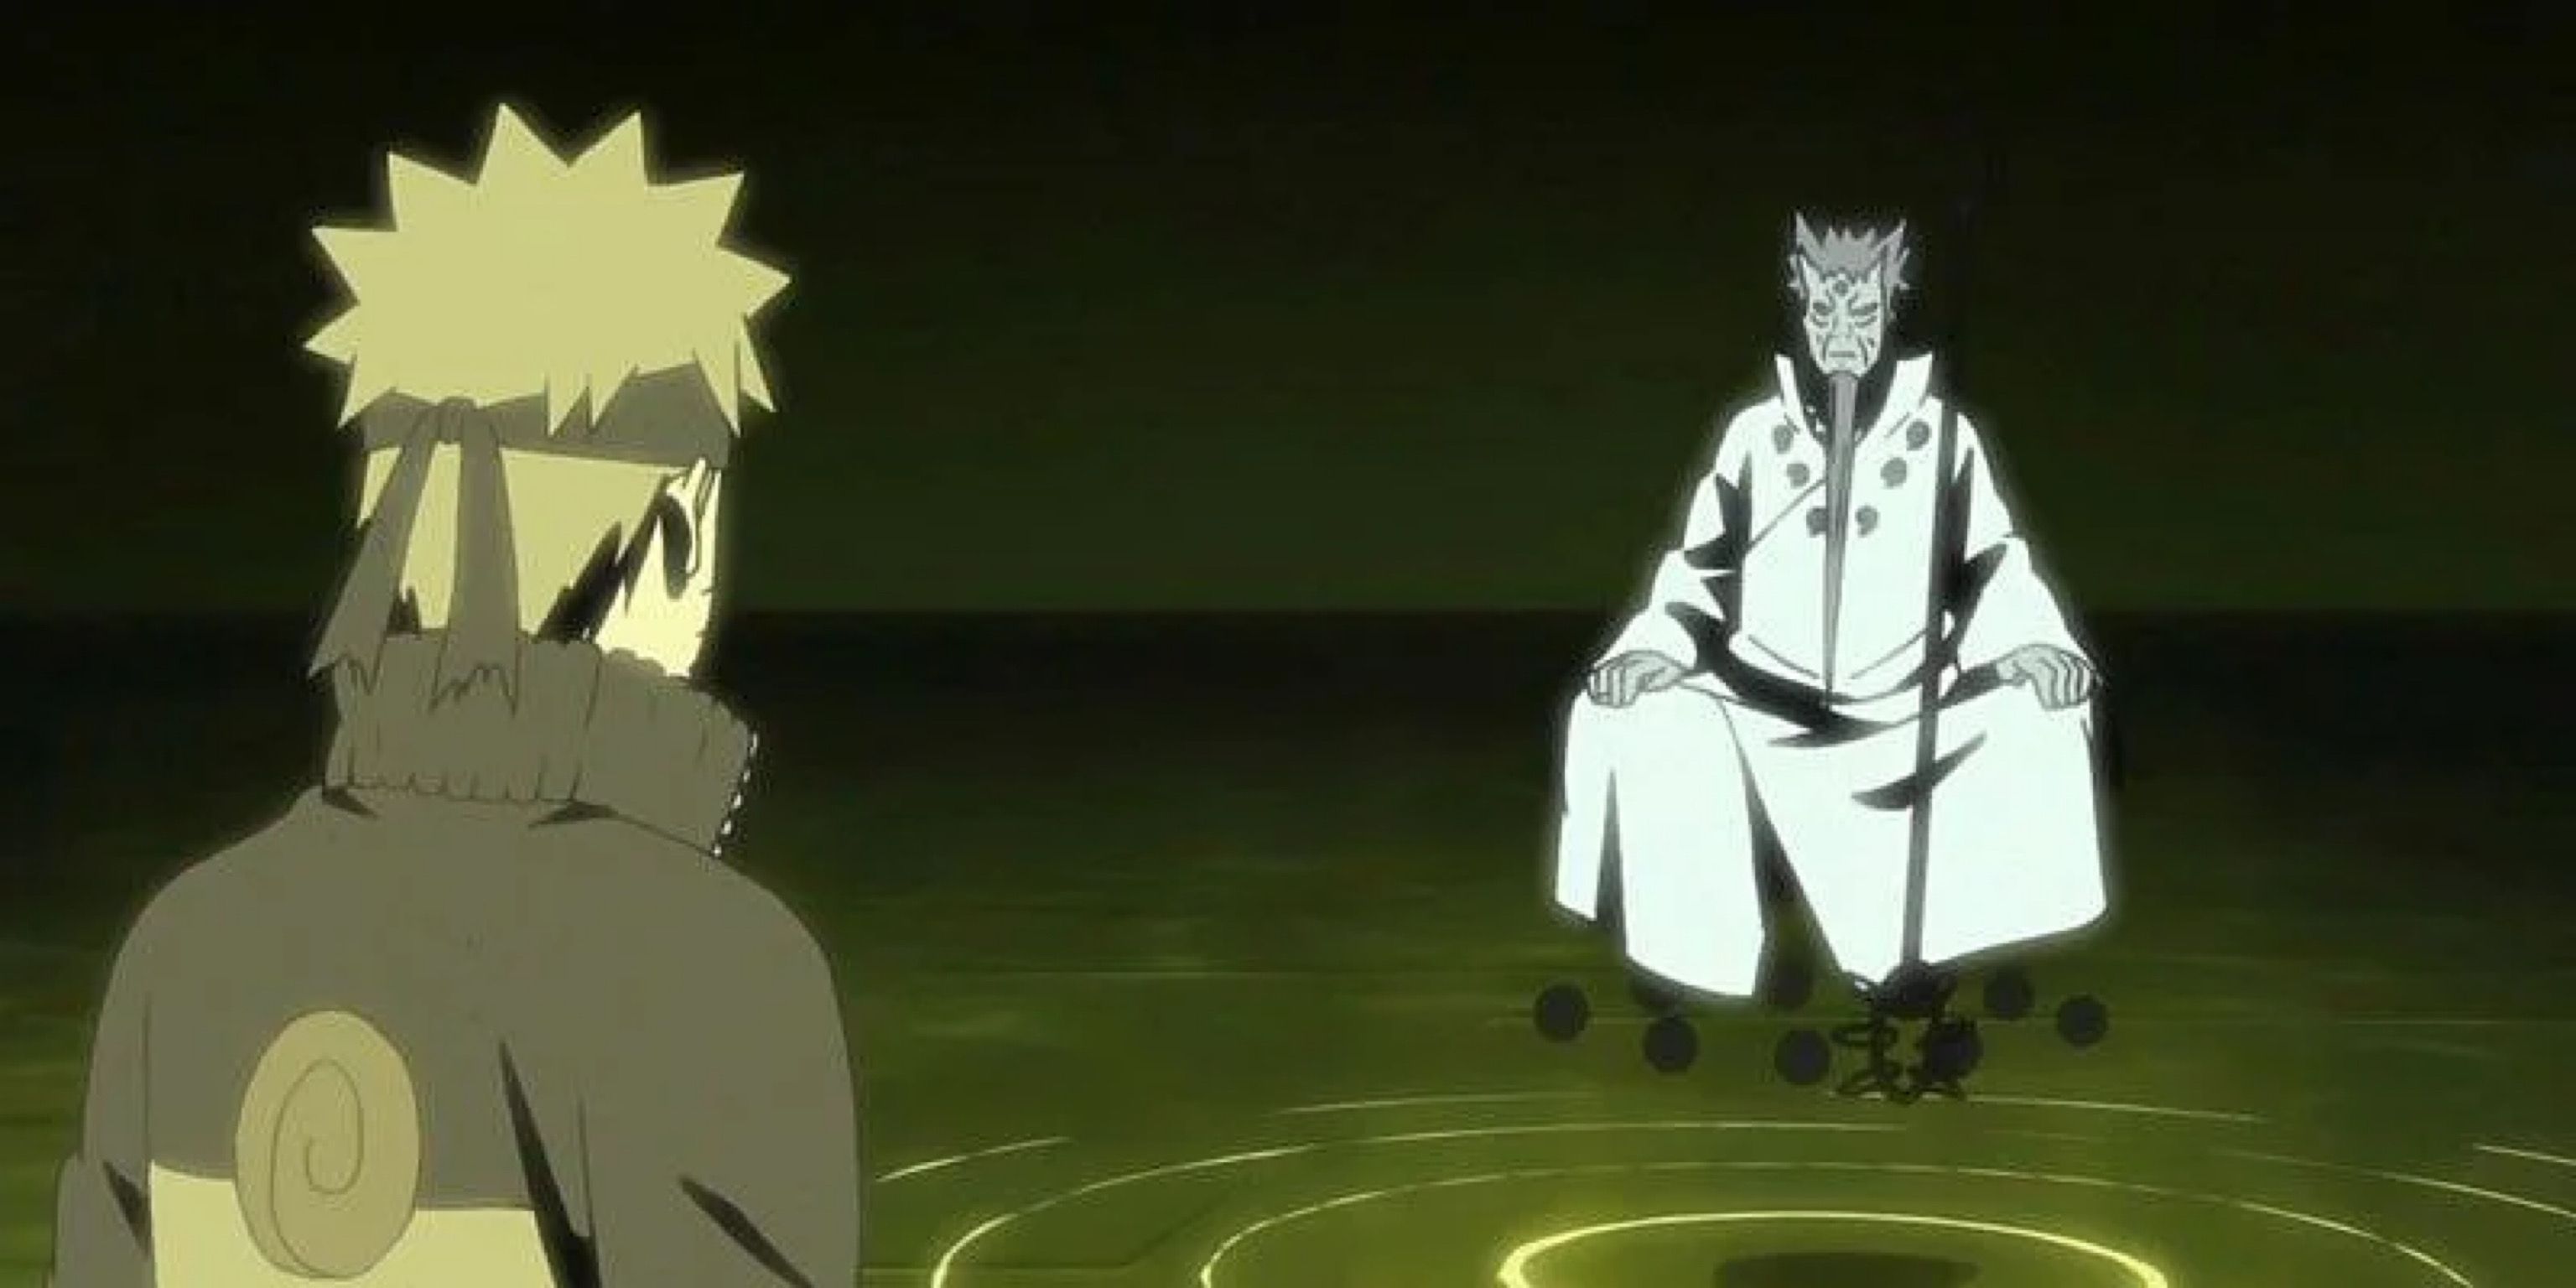 Naruto meets Hagaromo in Limbo in Naruto.